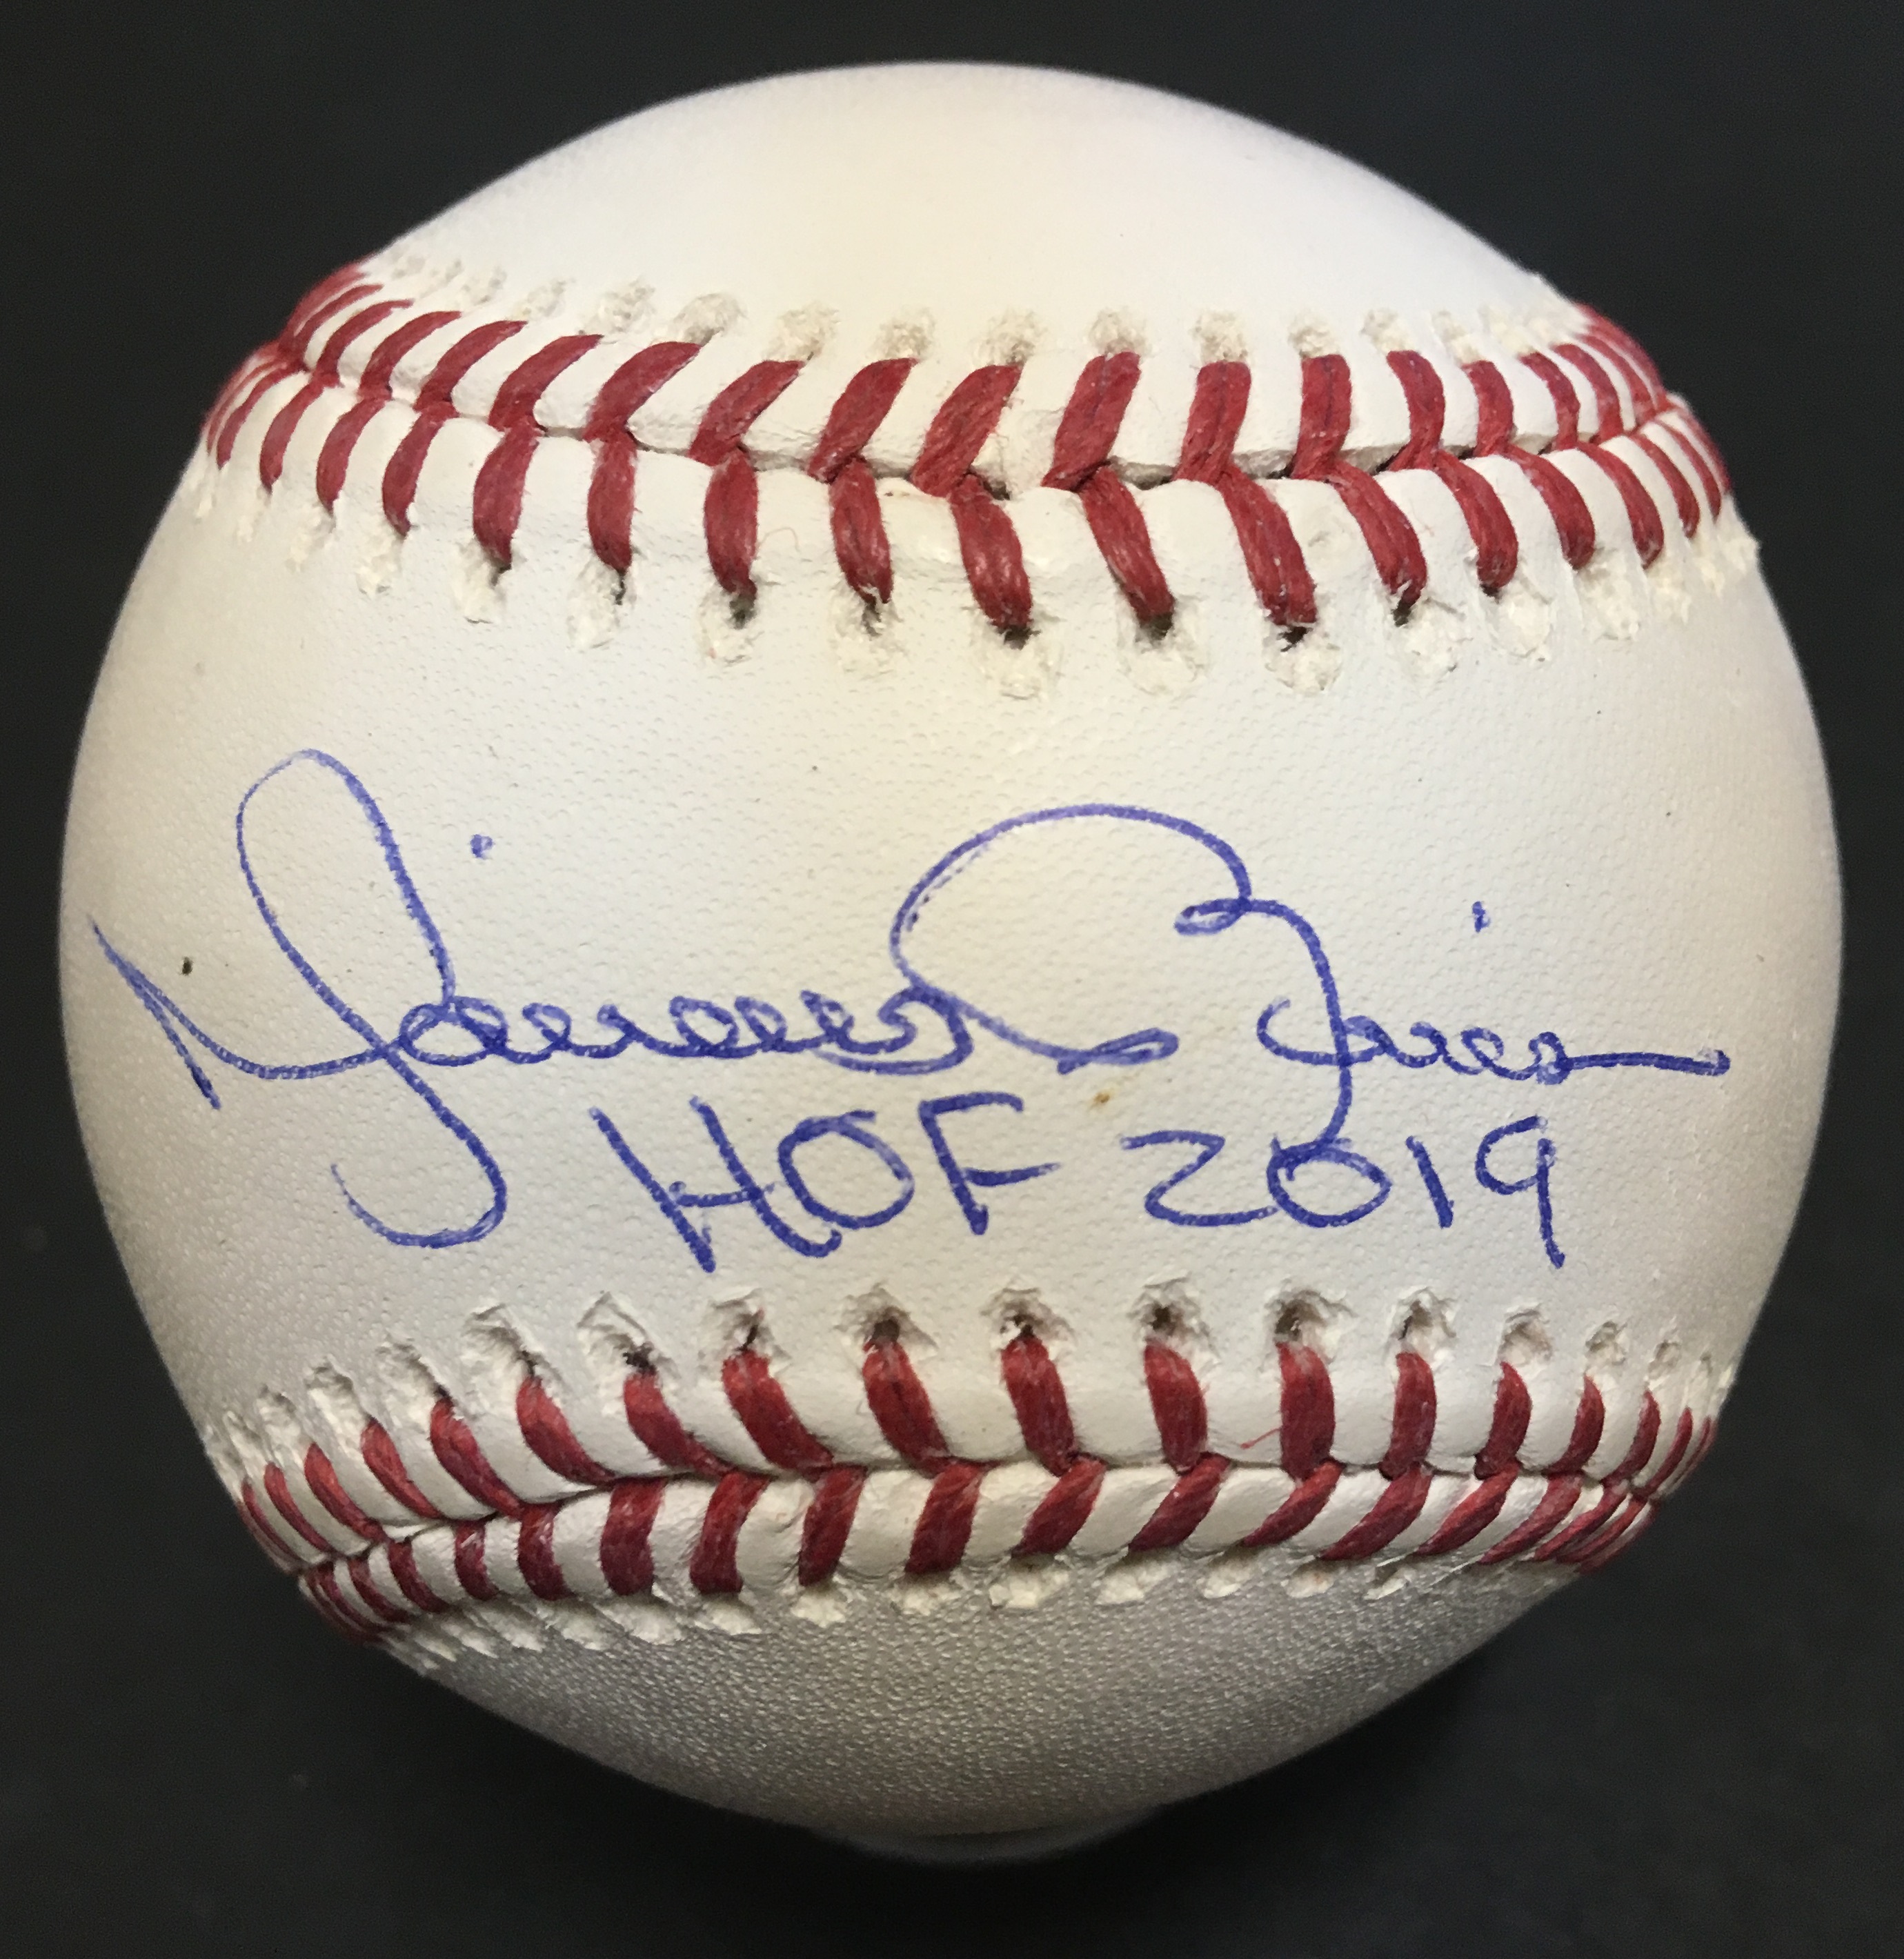 MARIANO RIVERA Signed Mlb Baseball Ins HOF 2019 Autograph In Person PSA/DNA COA